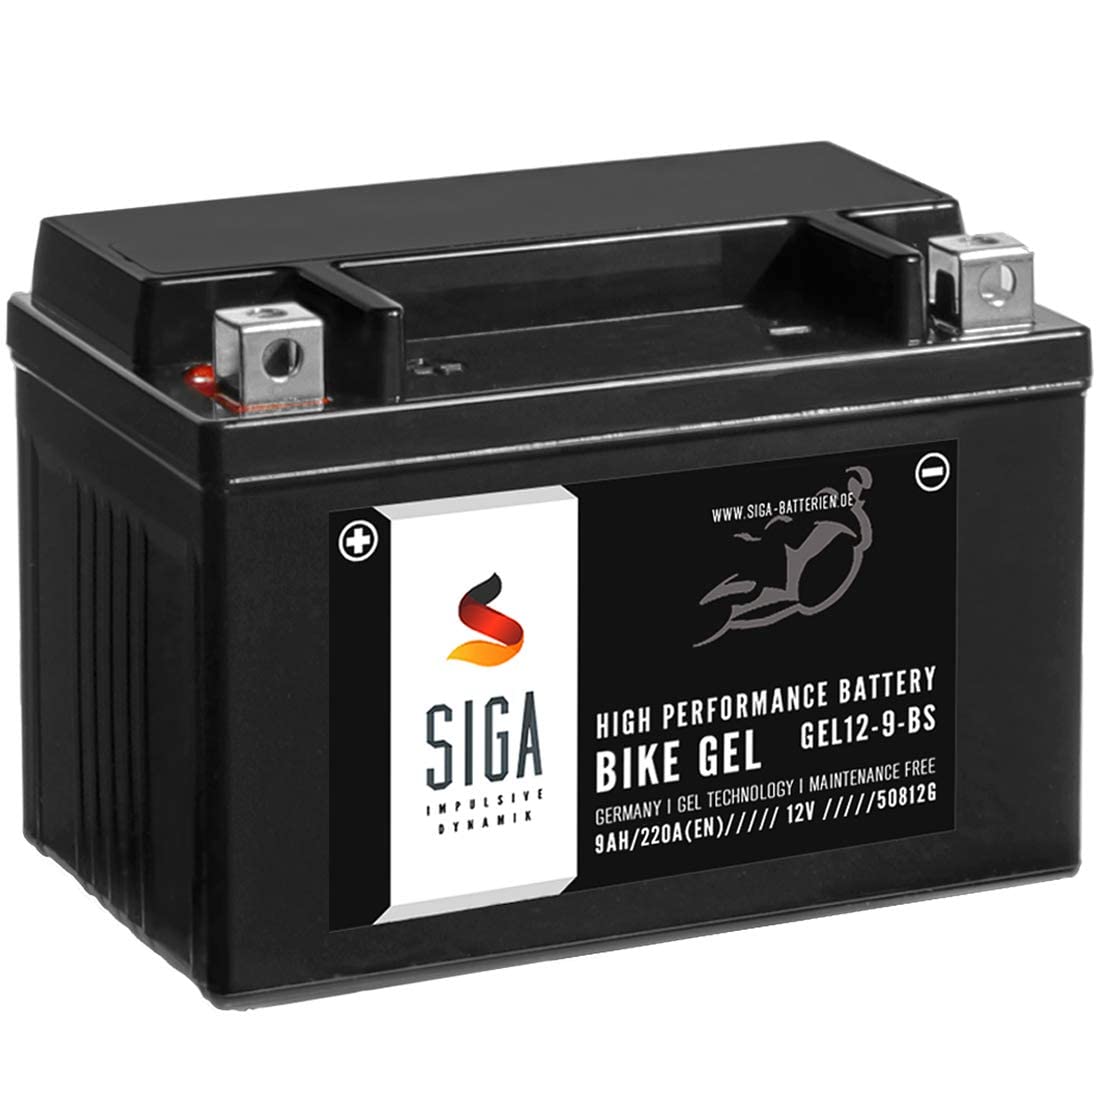 SIGA GEL Motorradbatterie 12V 9Ah 220A/EN GEL Batterie YTX9-BS GEL12-9-BS YTX9-4 GTX9-BS ETX-9-BS 50812